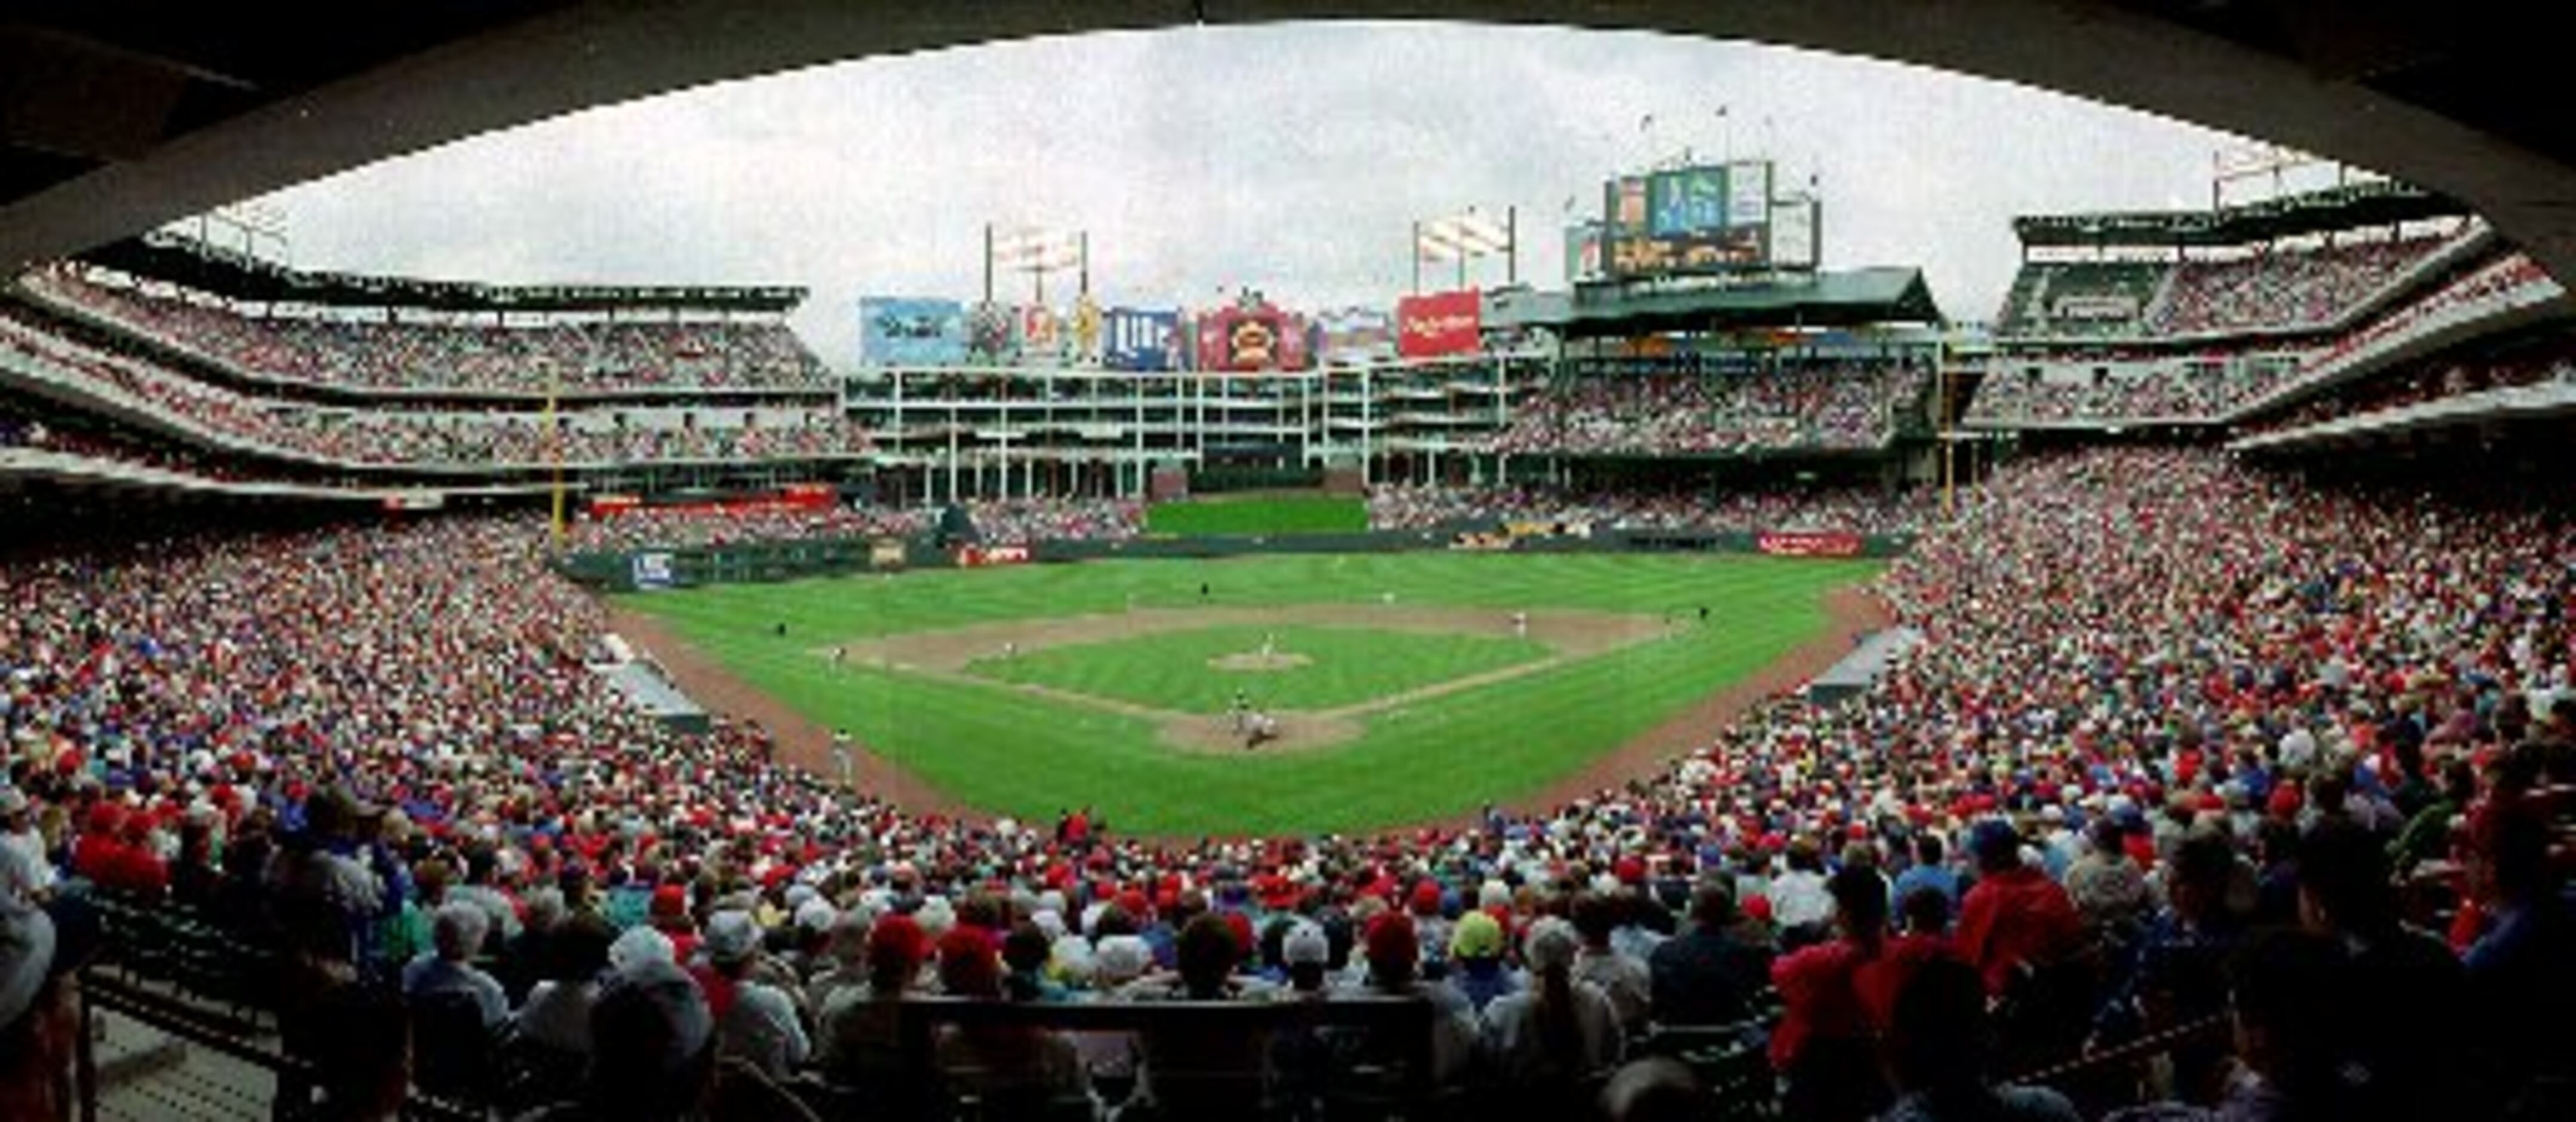 Rangers Ballpark in Arlington Historical Analysis by Baseball Almanac